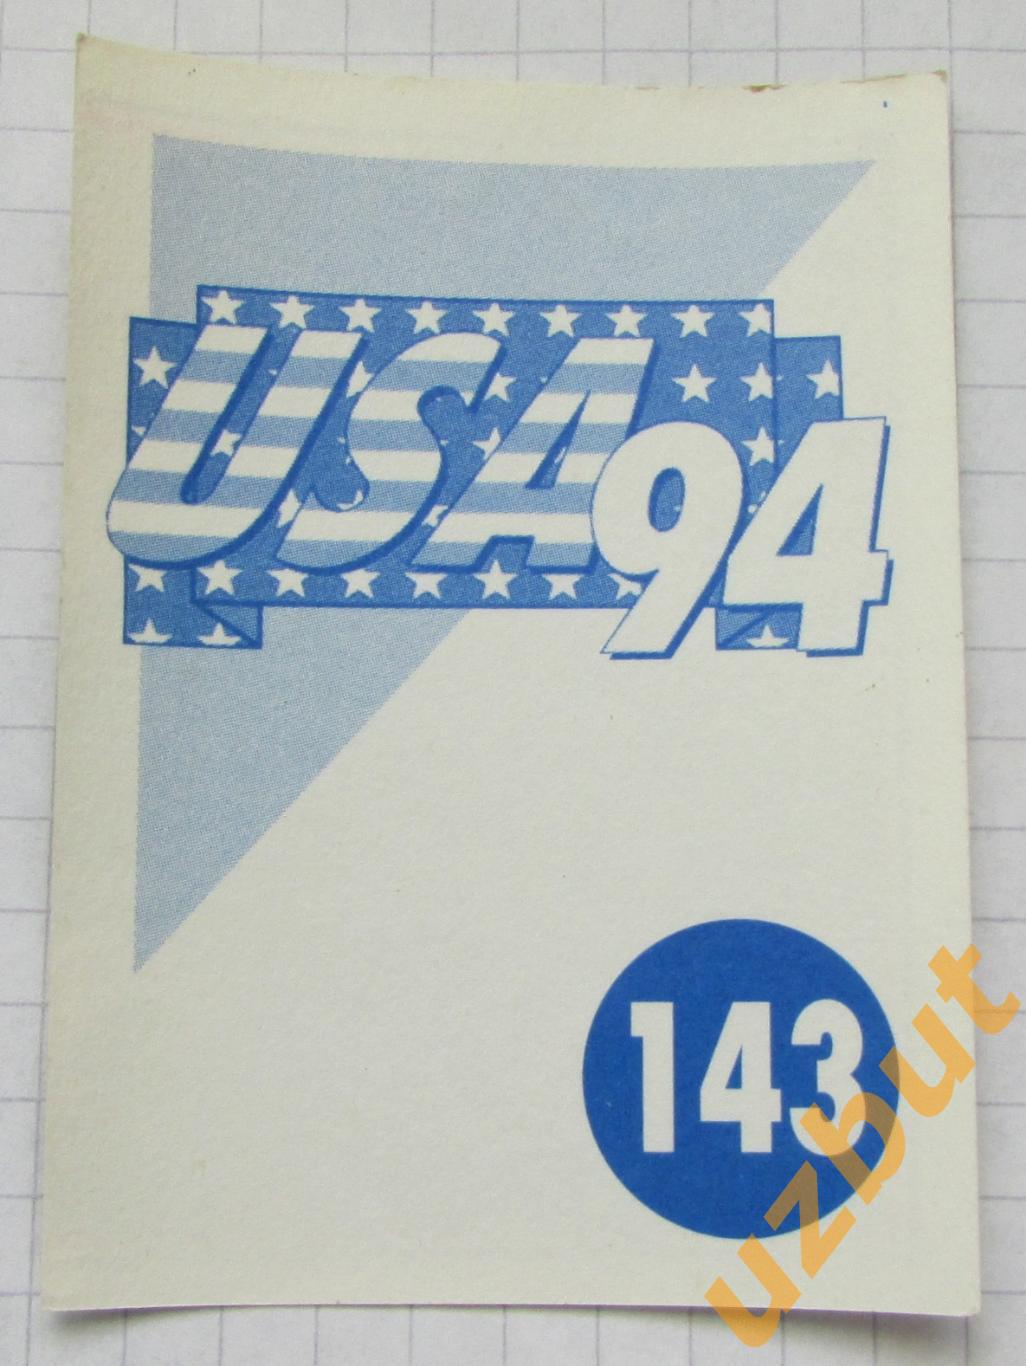 Наклейка Стадион Даллас 1 № 143 Euroflash ЧМ 1994 США 1